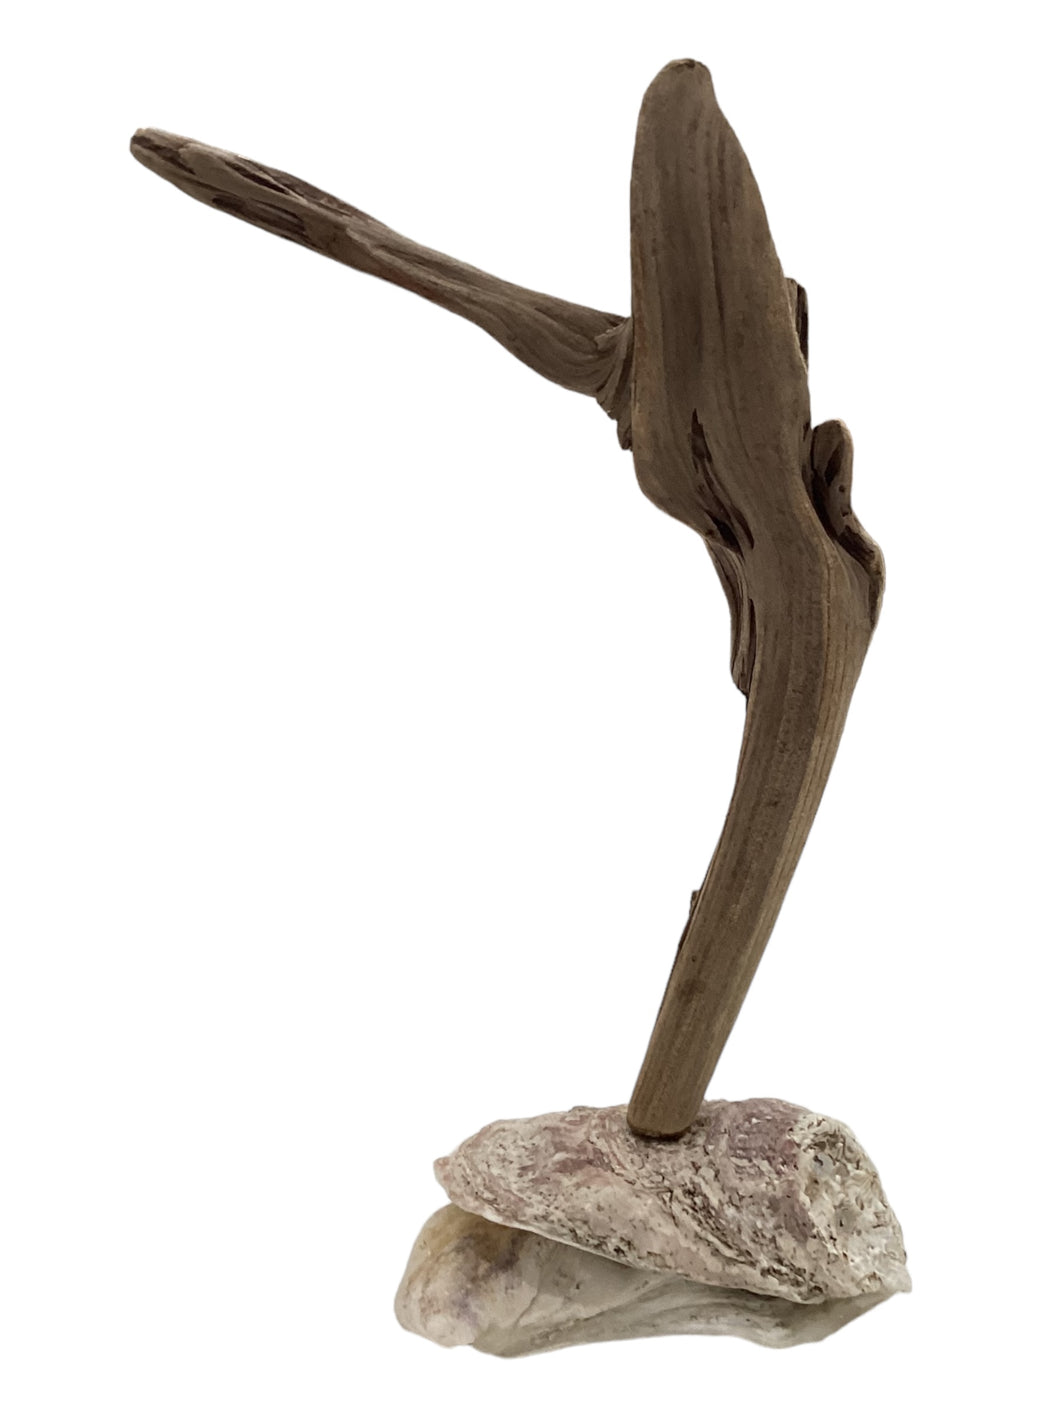 Driftwood Sculpture - Mother Natures Magical Creation